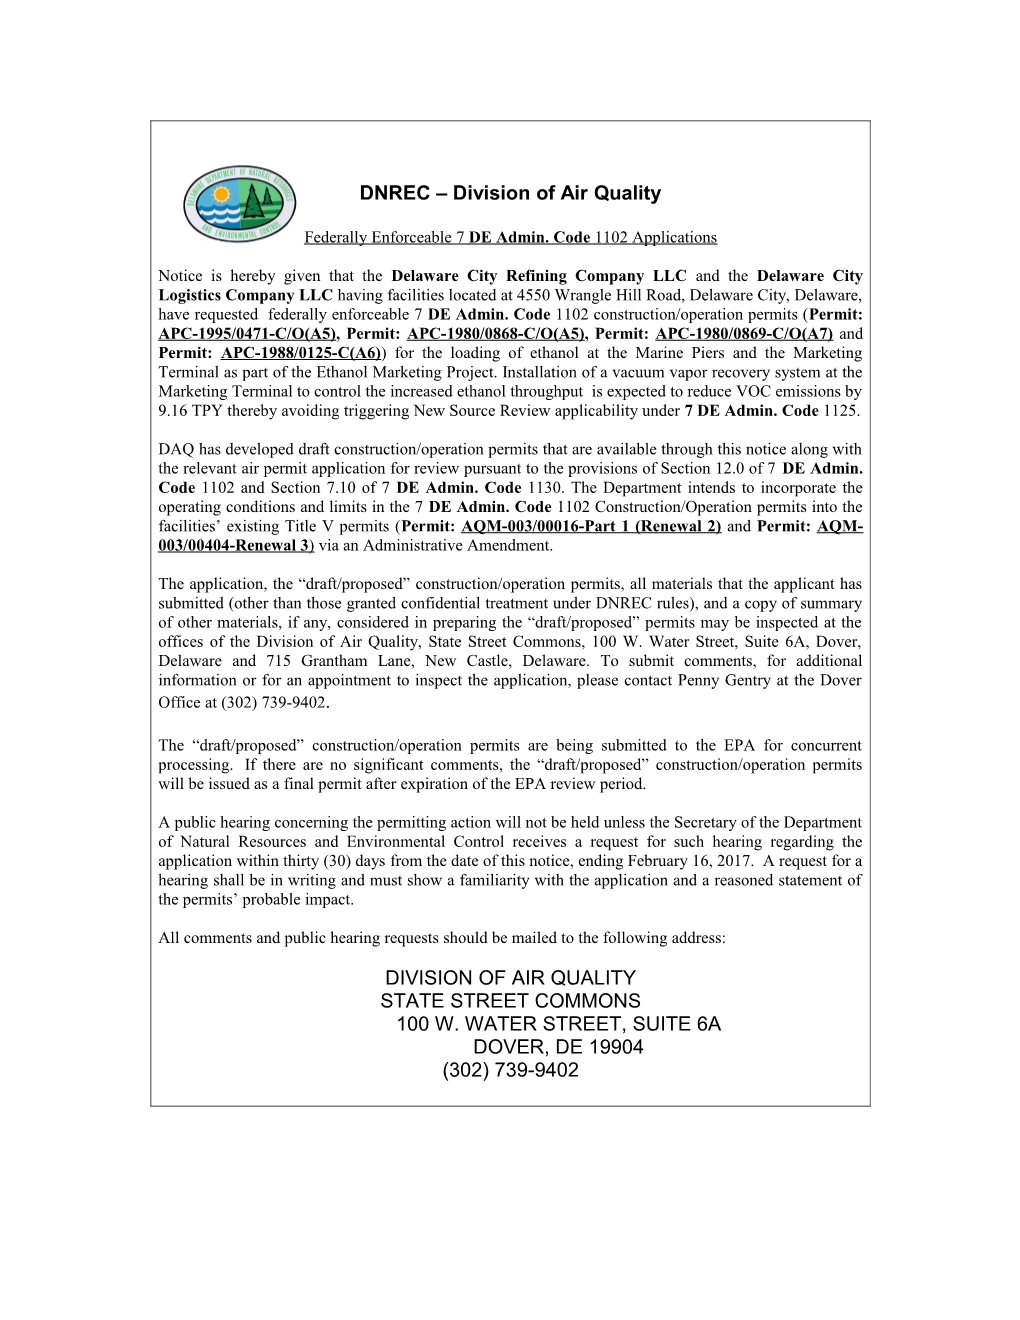 DNREC Division of Air Quality